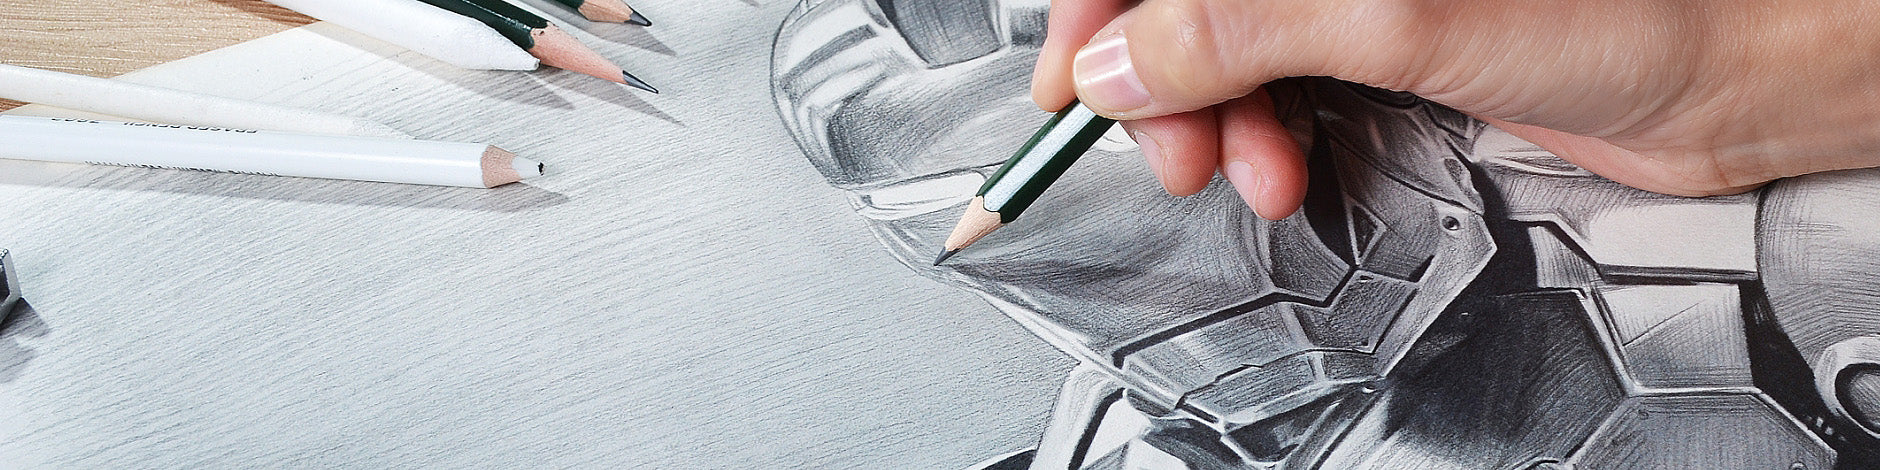 Colorless Blender Pencil – Pasler Art